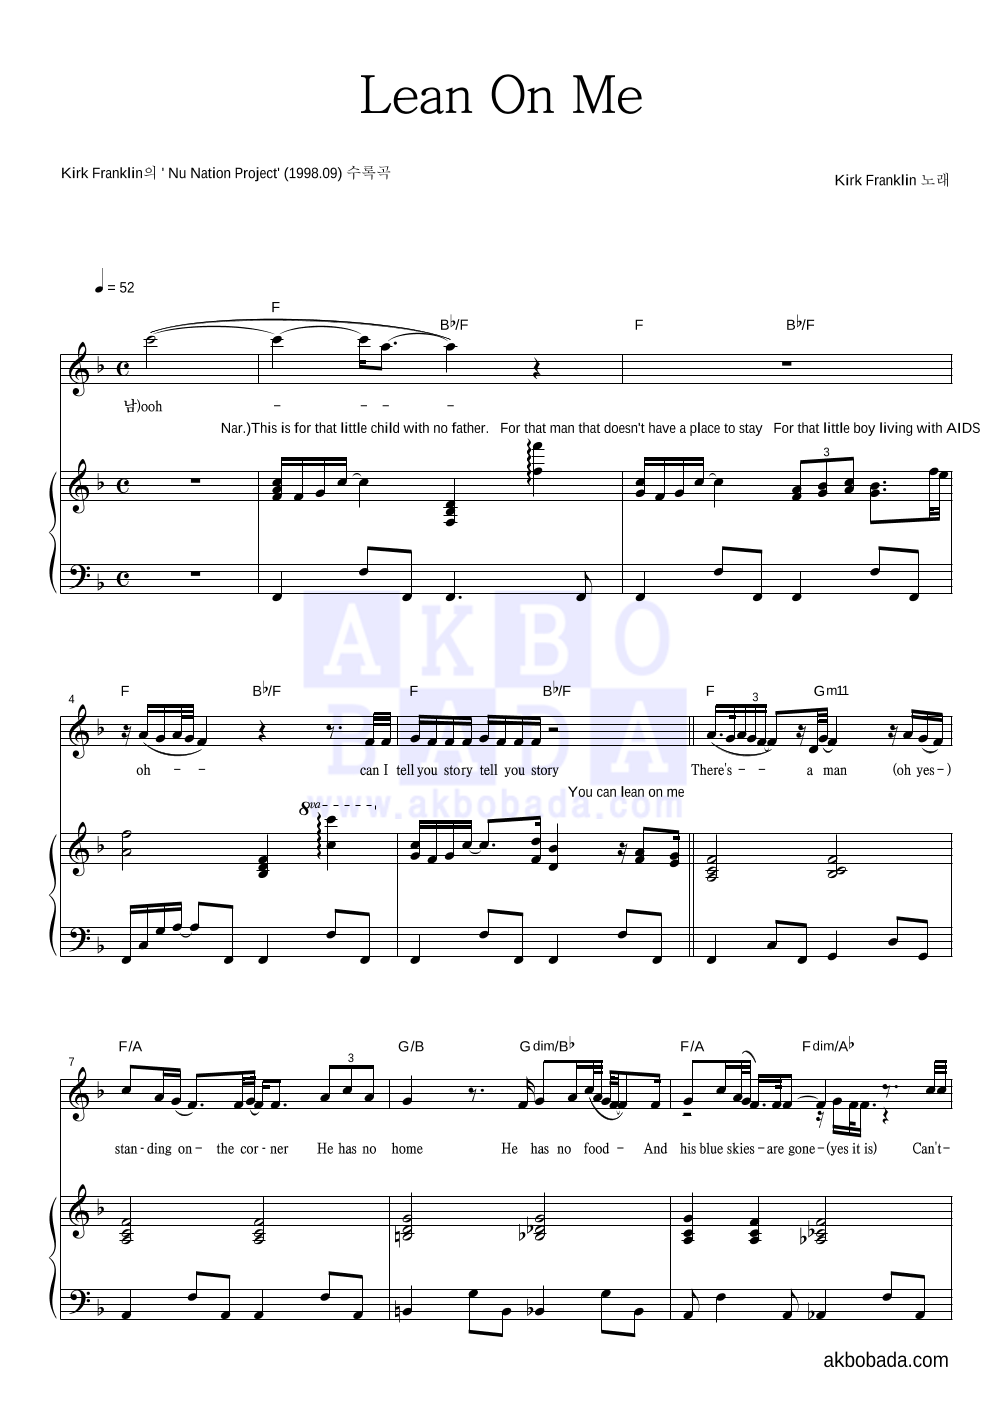 Kirk Franklin - Lean On Me 피아노 3단 악보 